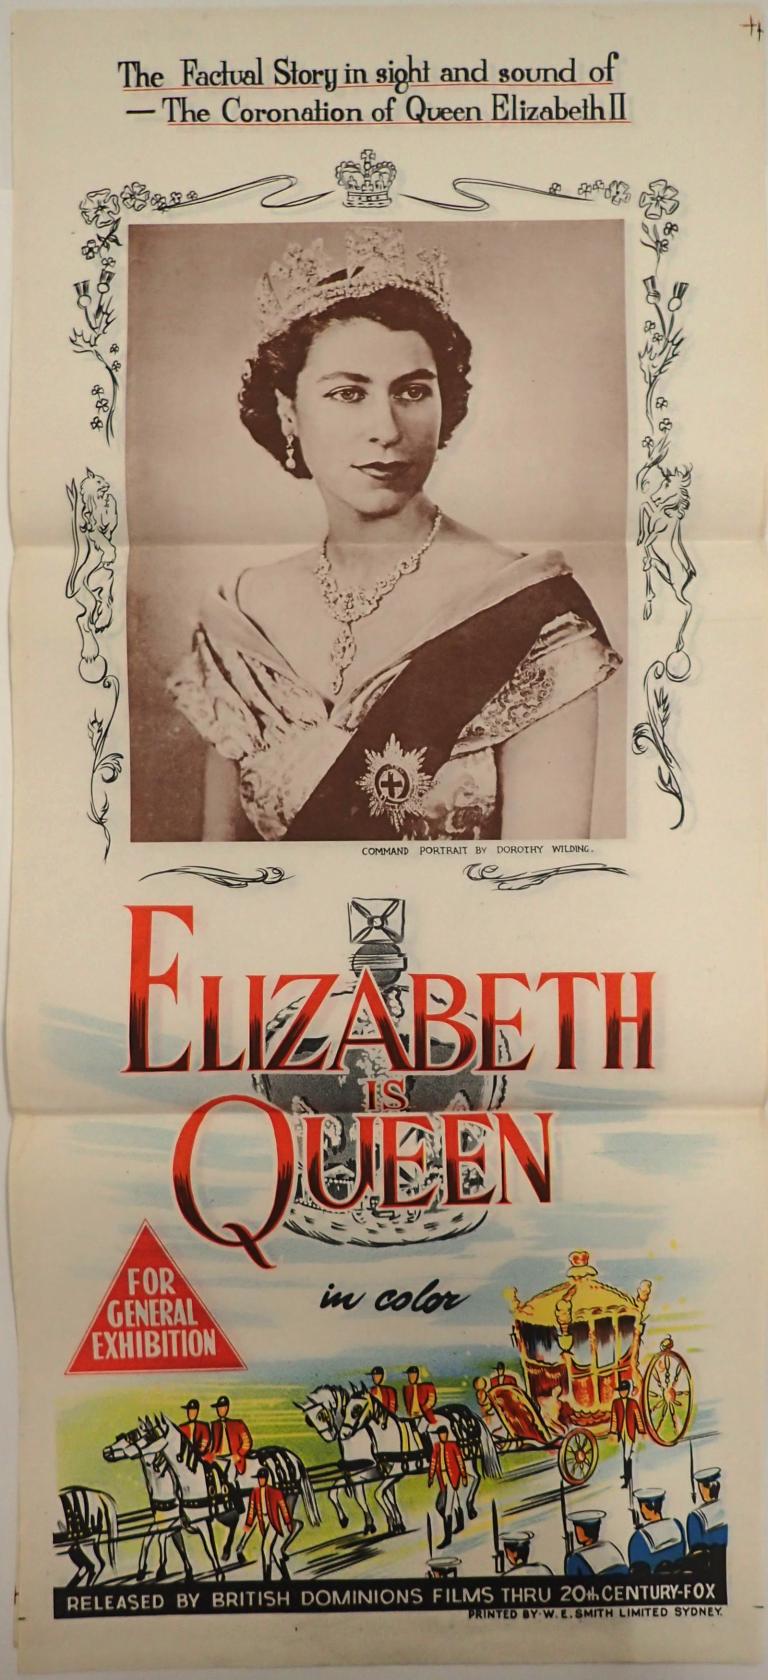 Poster showing a young Queen Elizabeth II